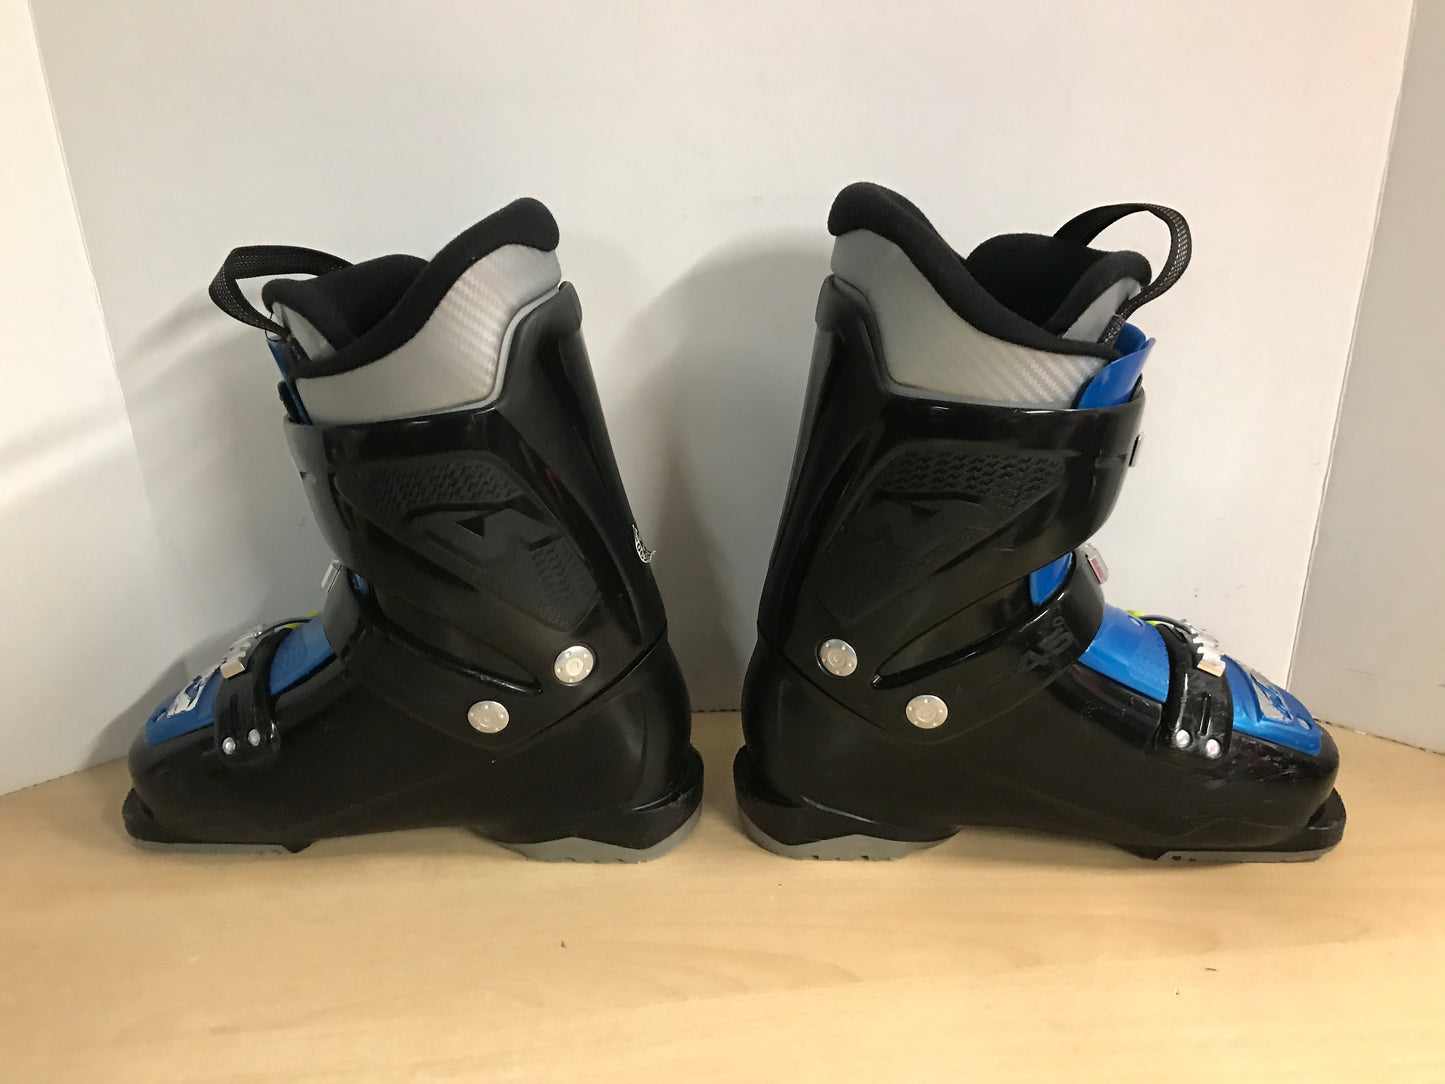 Ski Boots Mondo Size 24.5 Men's Size 6 Ladies Size 7 290 mm Nordica Firearrow Blue Black Lime